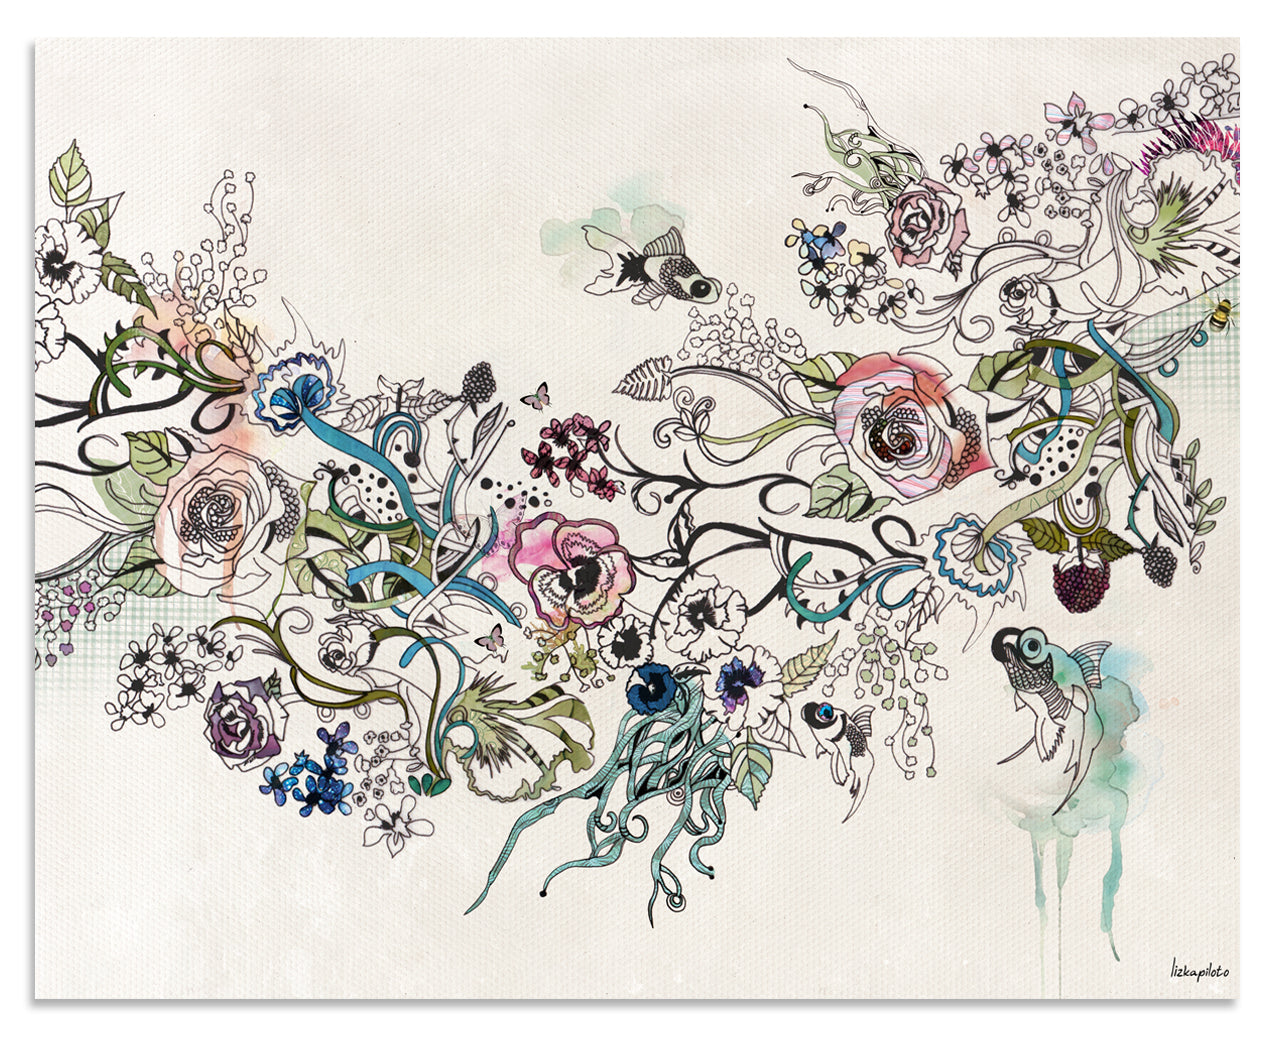 Corals Abstract Painting - Liz Kapiloto Art & Design